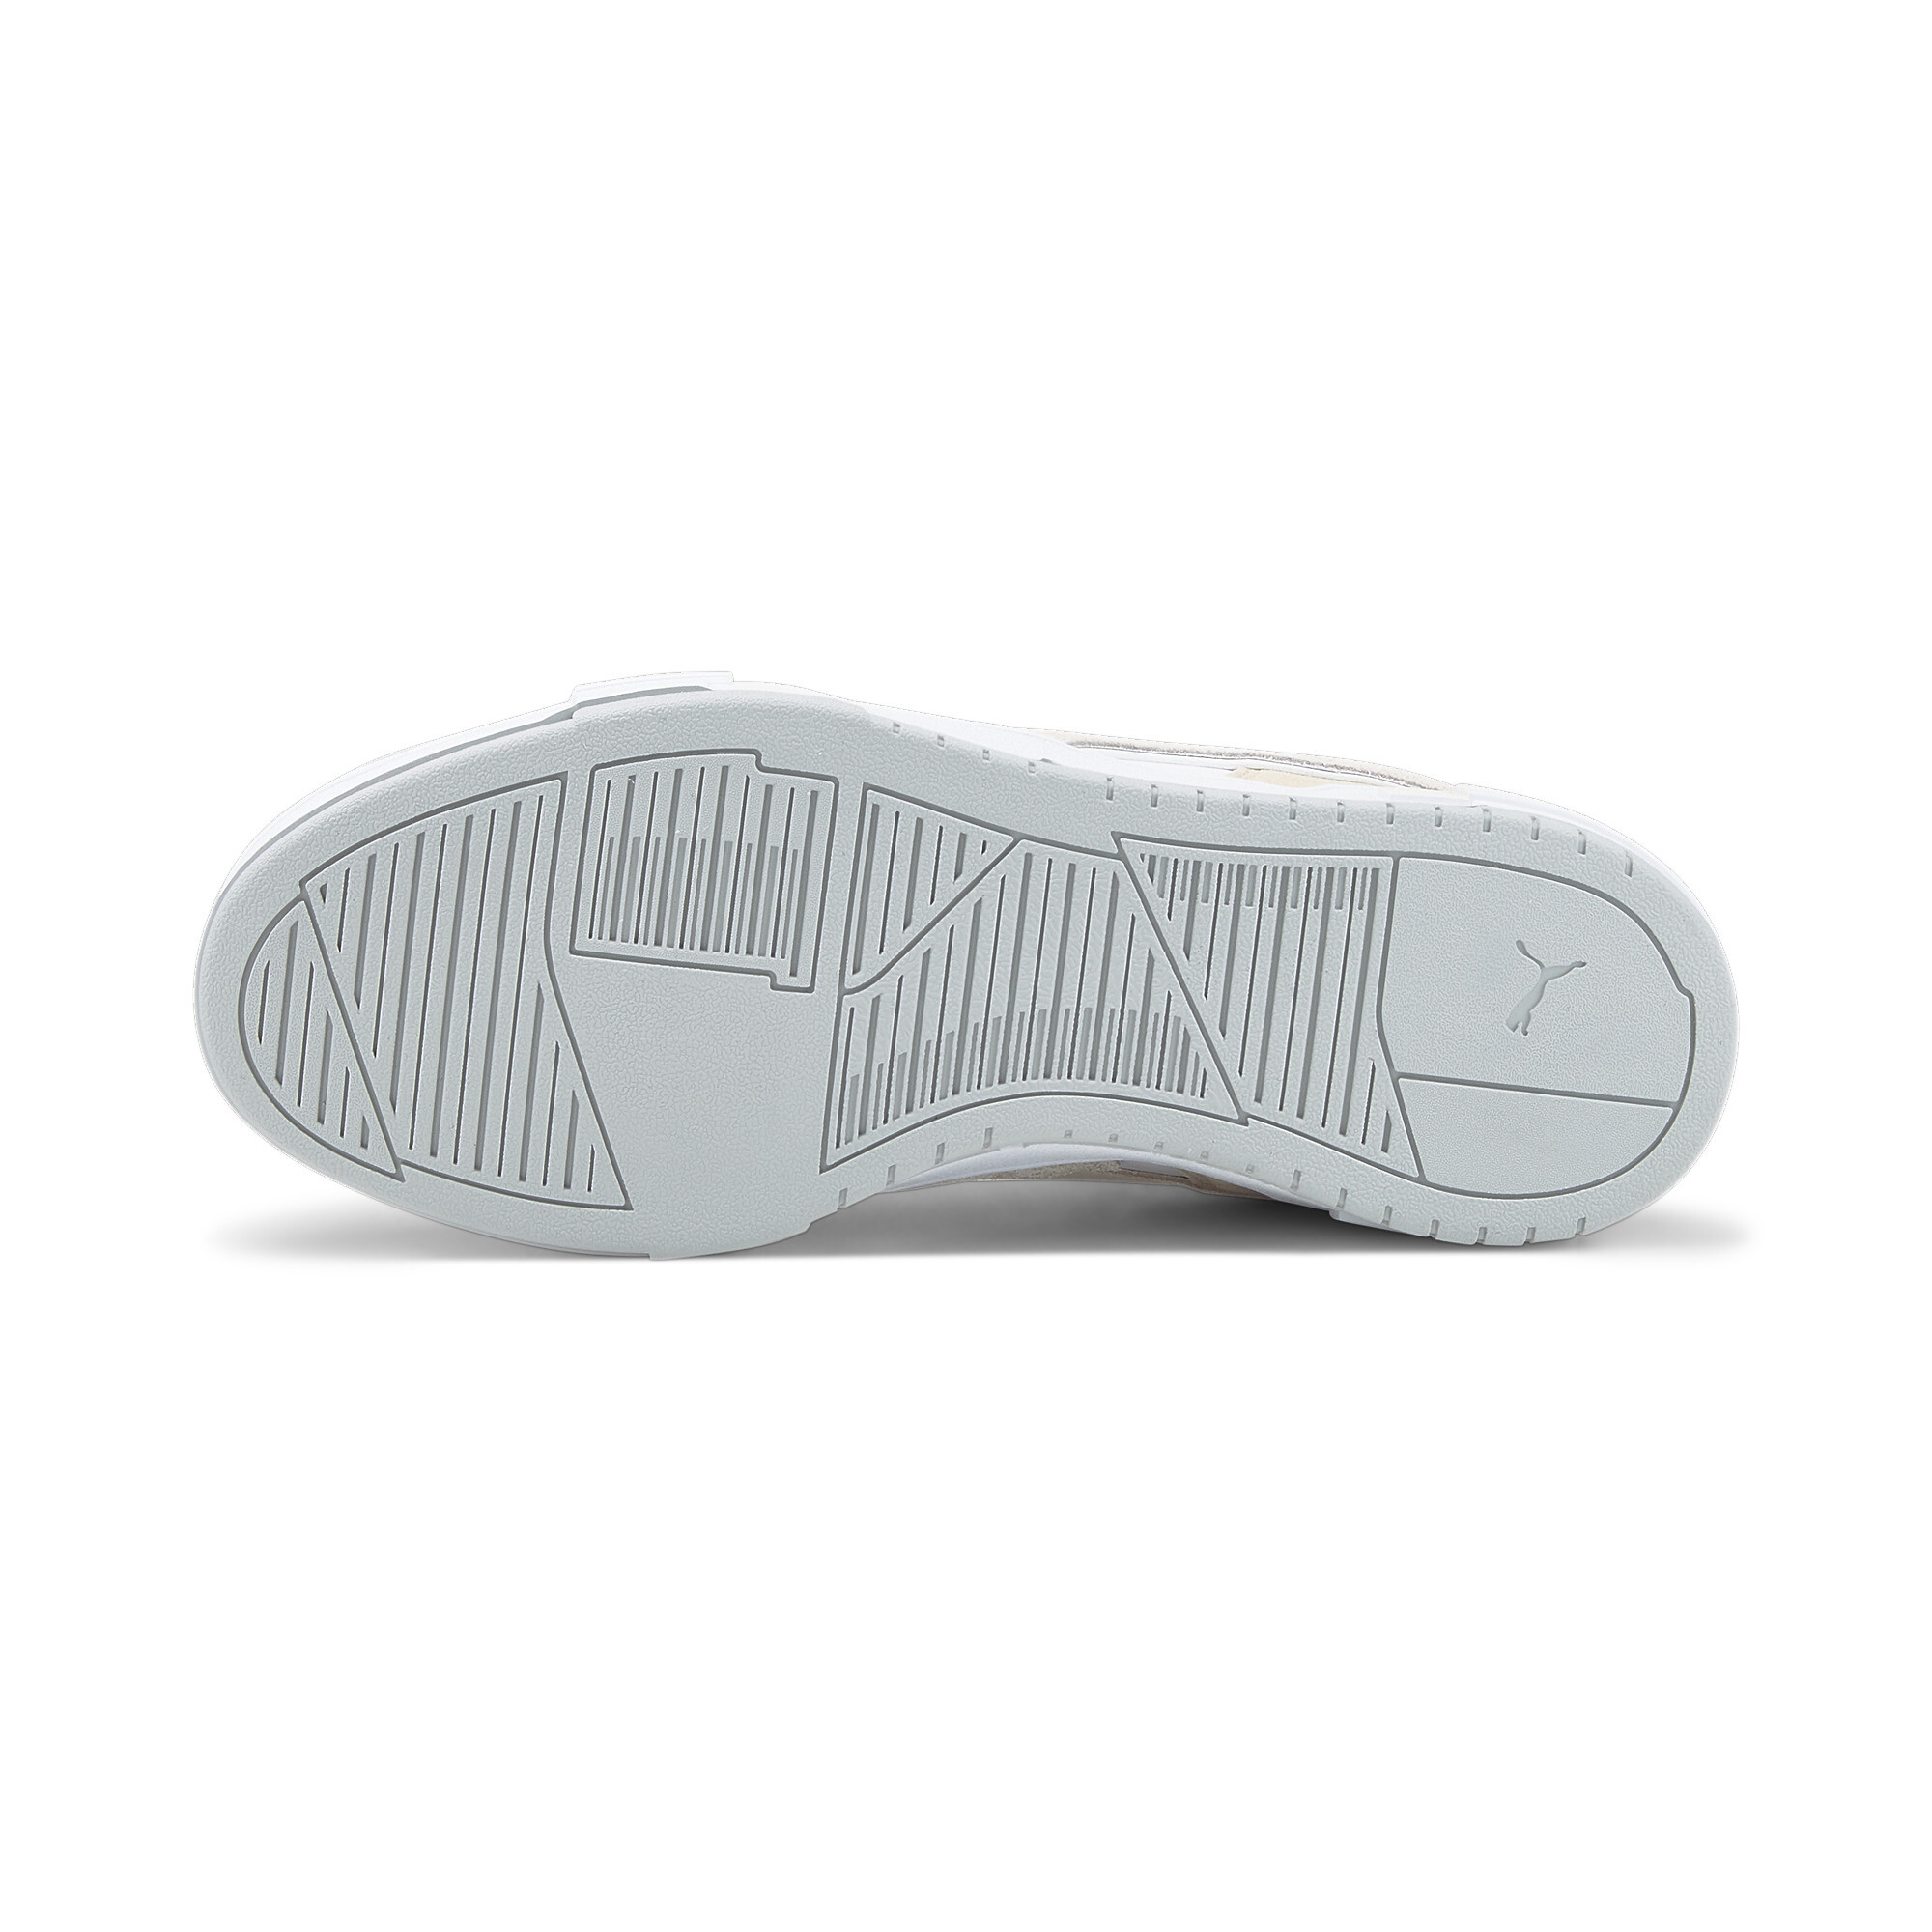 Men's Puma CA Pro Glitch Suede Sneakers, White, Size 35.5, Shoes